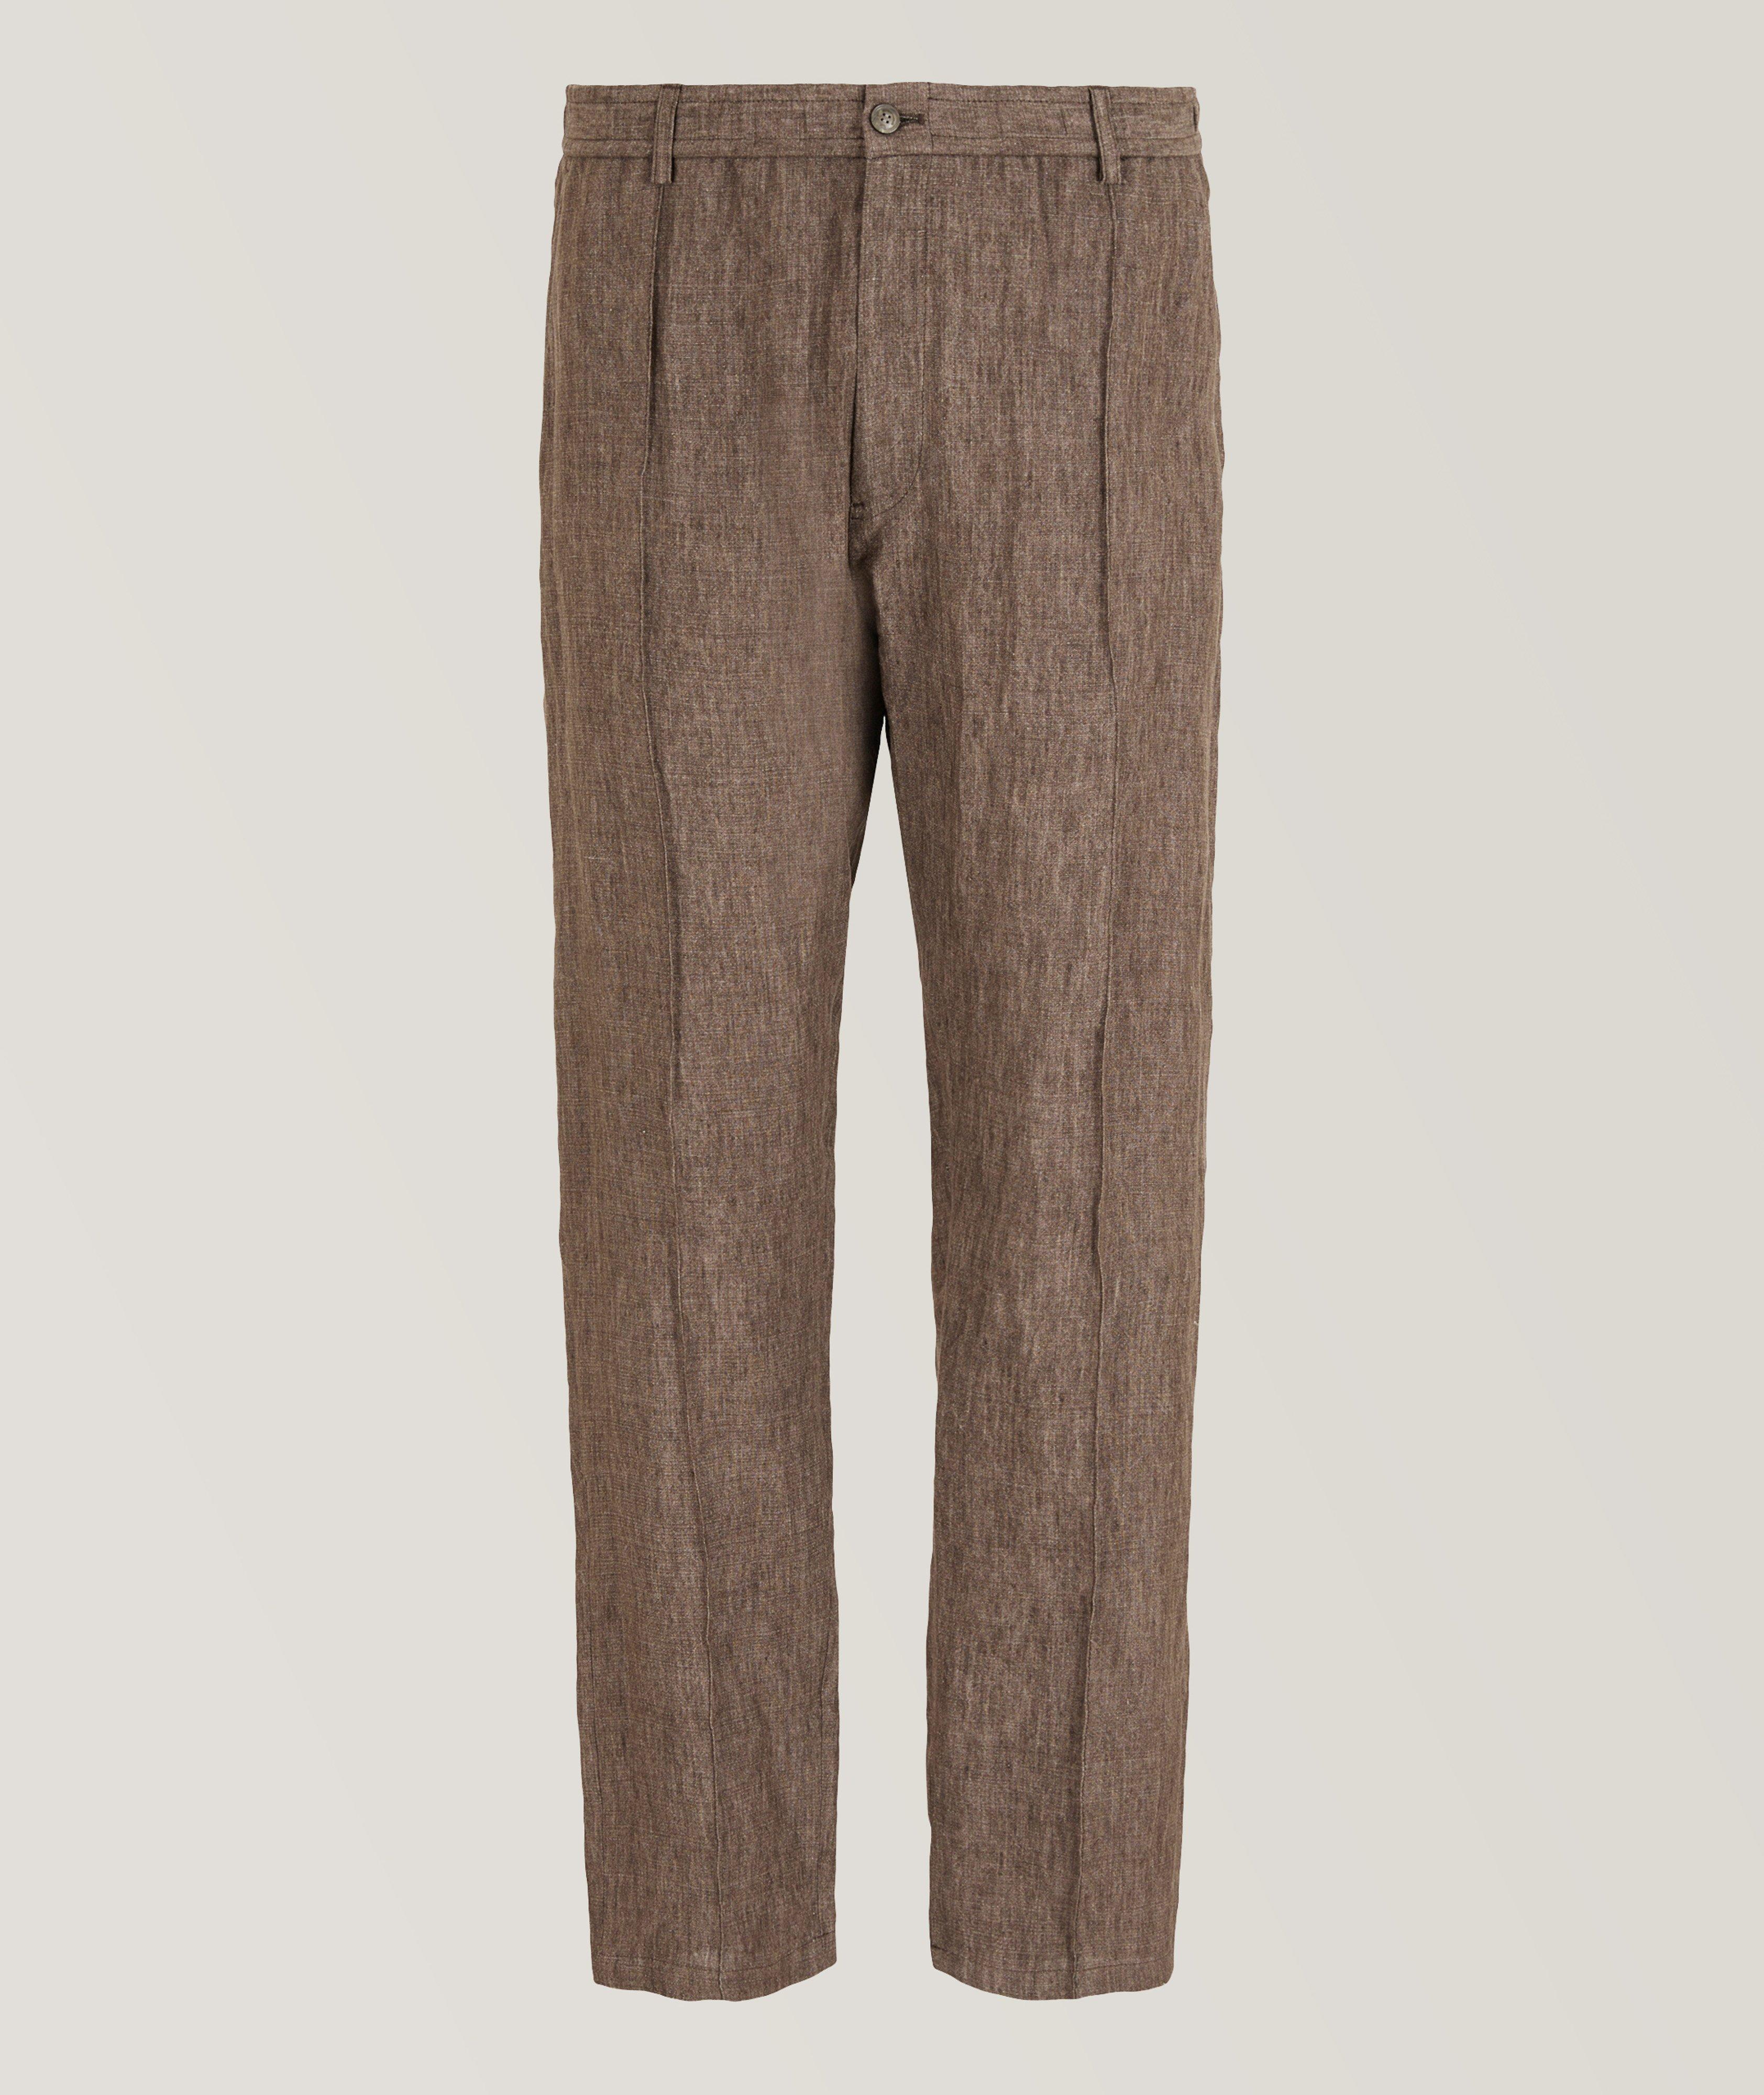 Pantalon en crêpe de lin délavé image 0